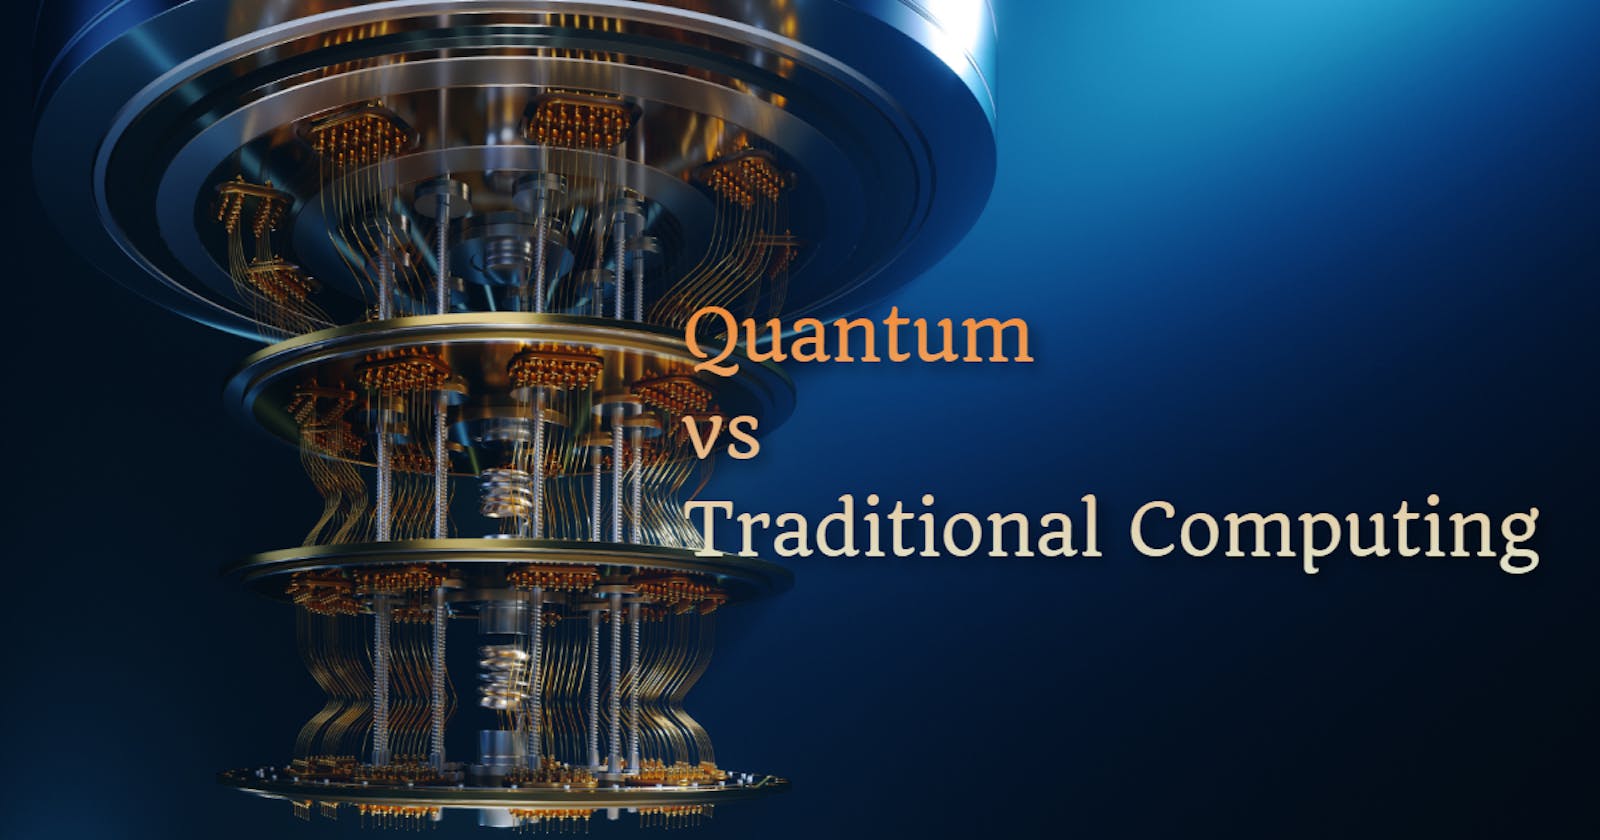 Computing: Quantum vs Traditional